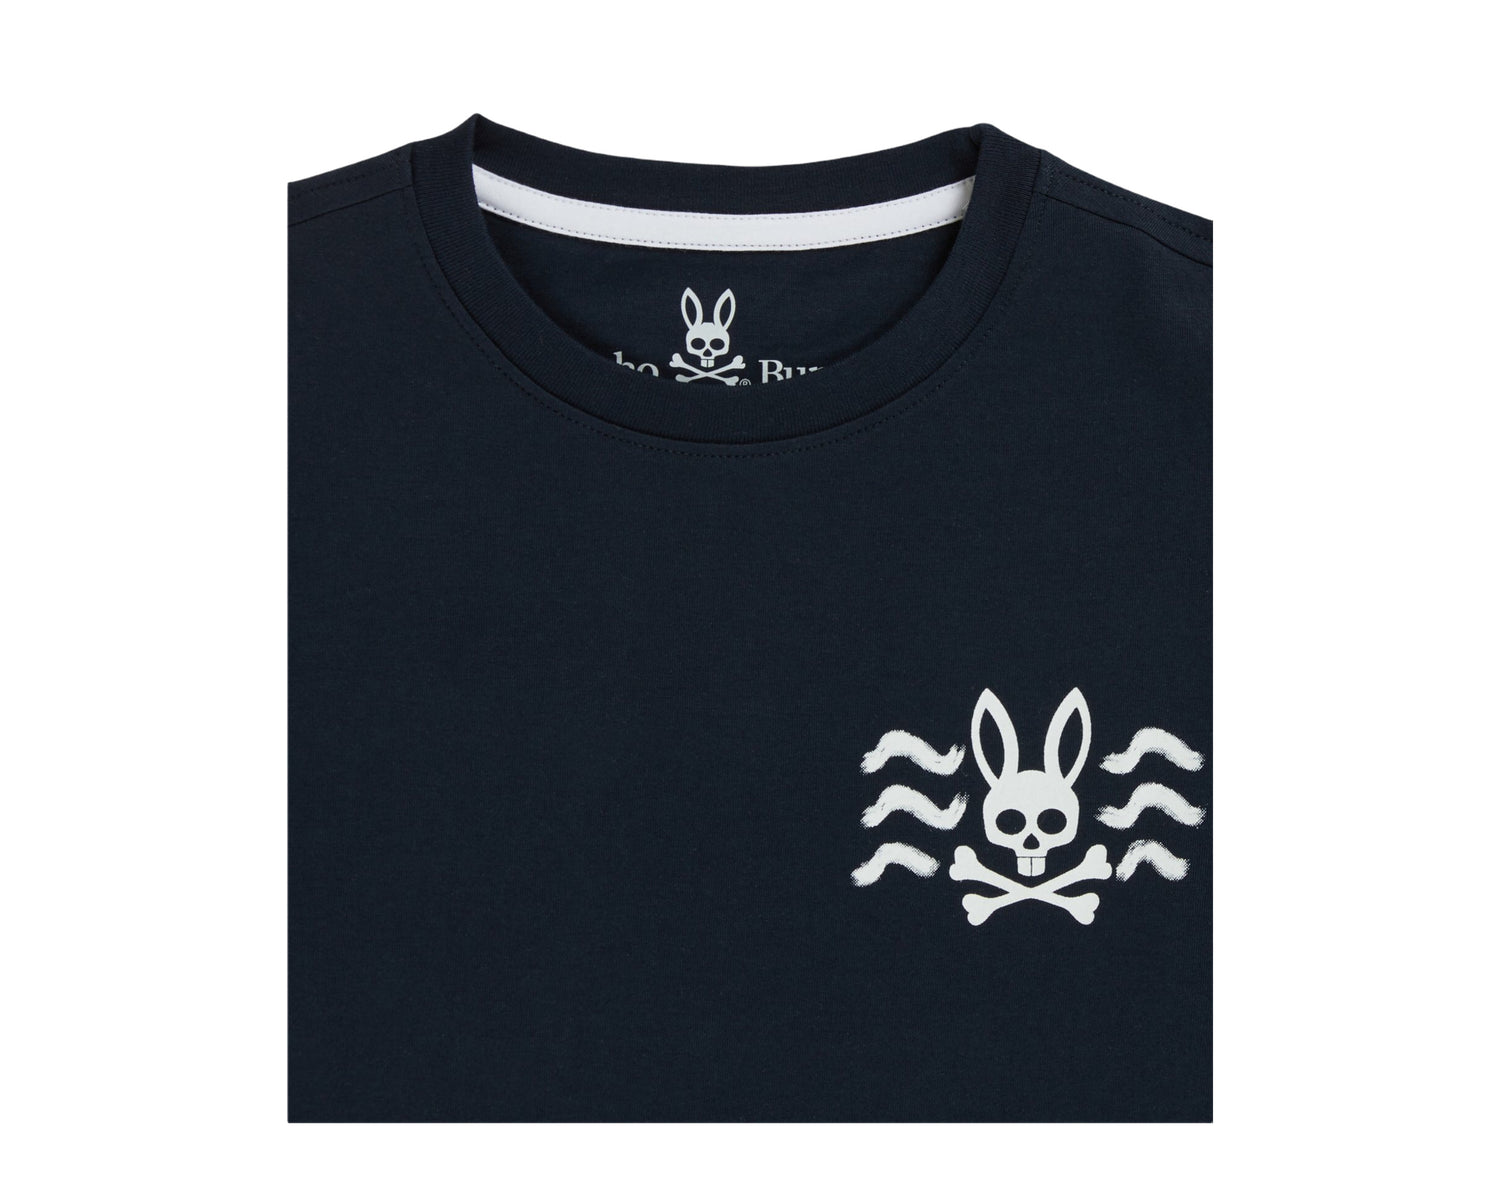 Psycho Bunny Filcham Kids' Tee Shirt